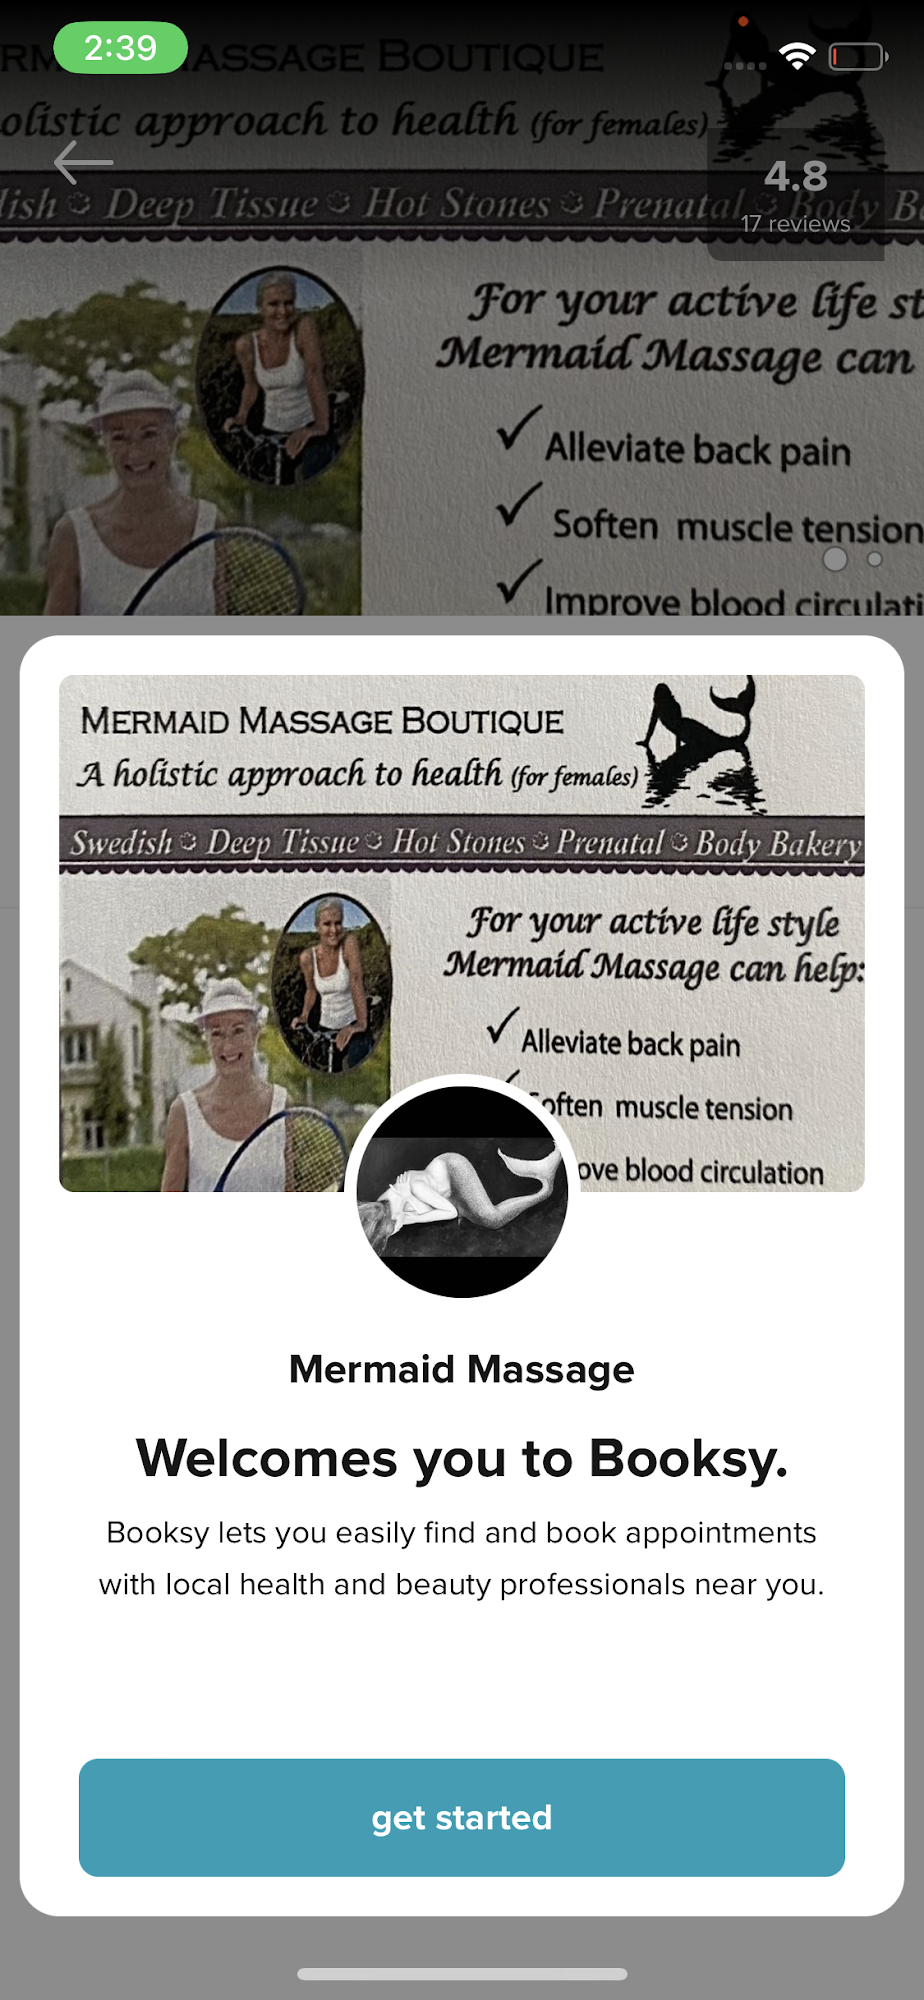 Mermaid Massage 708 MA-134 #5, South Dennis Massachusetts 02660